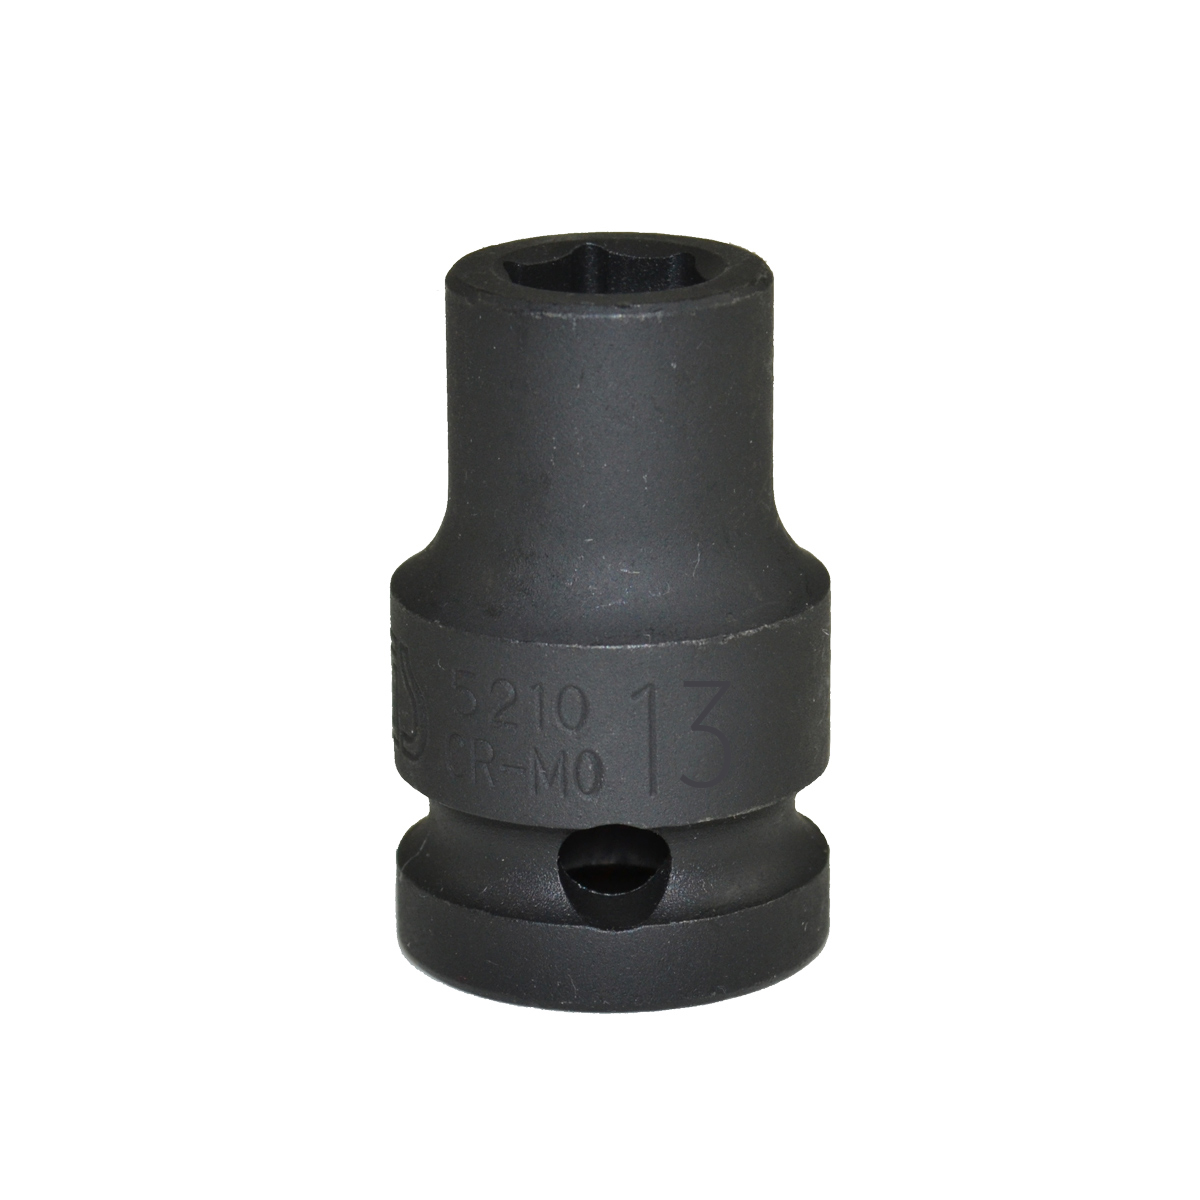 Impact wrench socket 10mm suitable for ValFix Size: Schlagschraubernuss 1/2 Zoll 13mm passend für EcoVal